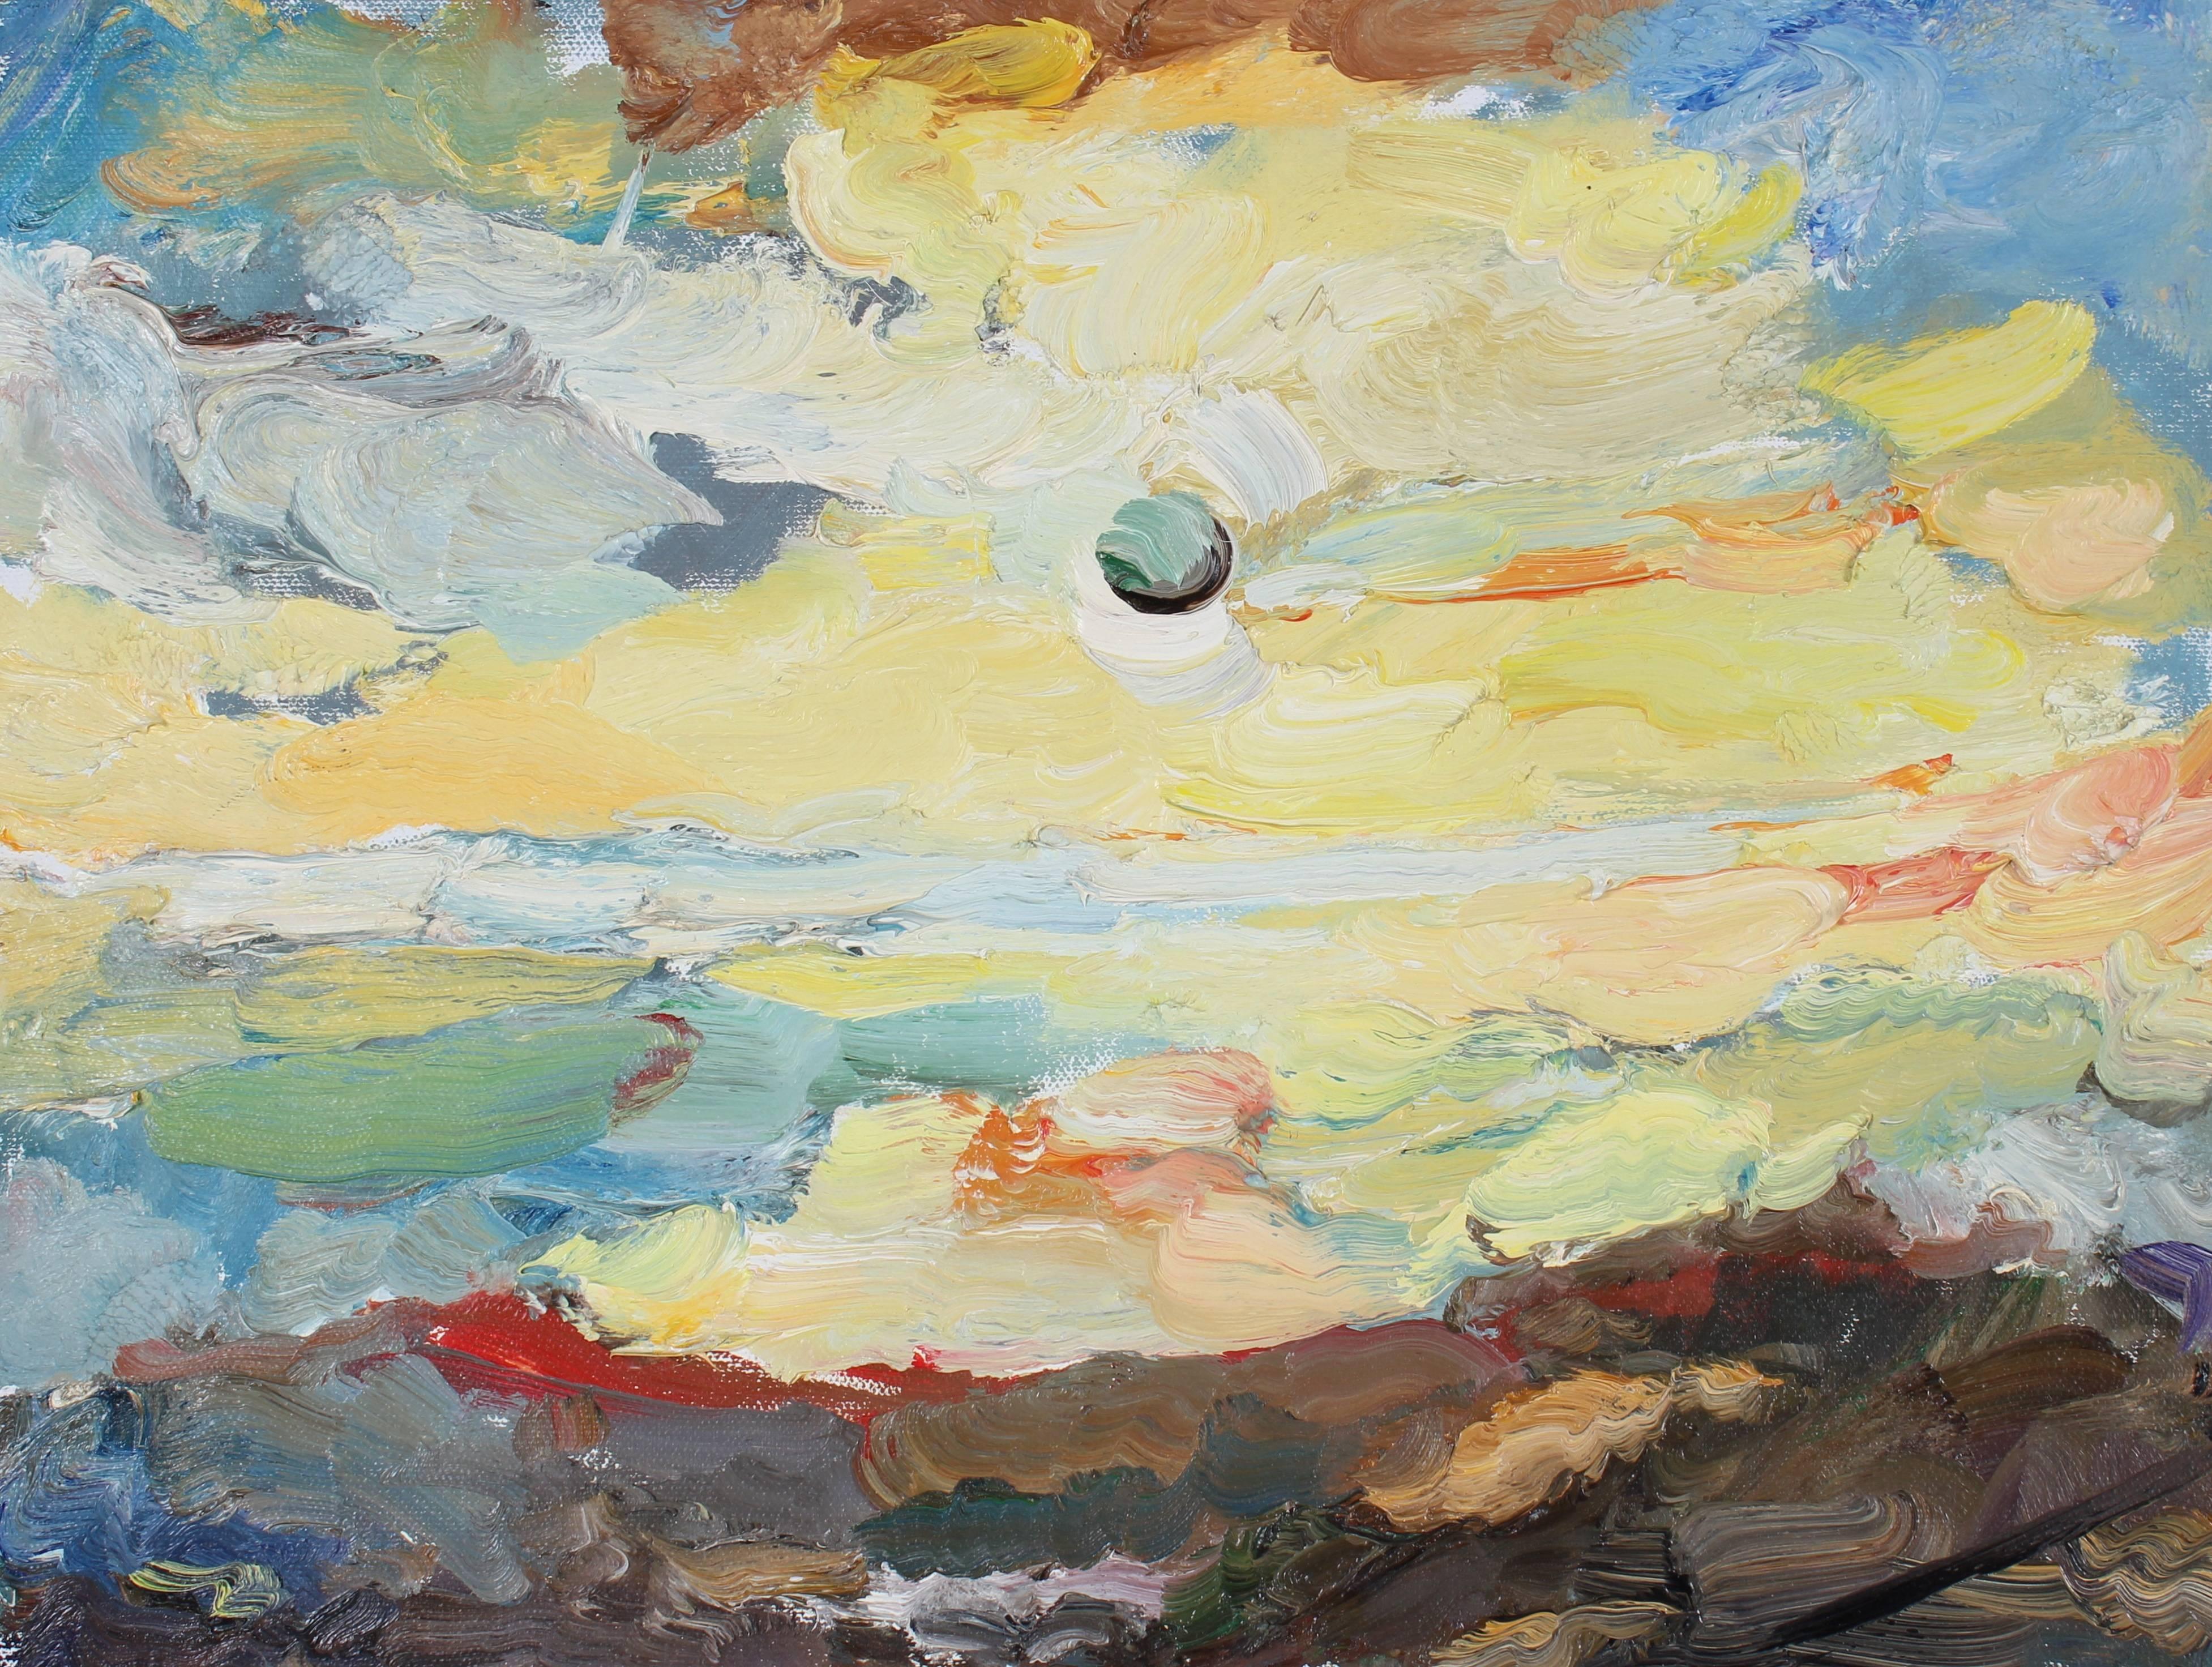 Jack Freeman Landscape Painting - "Sunset", San Francisco Landscape Oil Painting, 2010